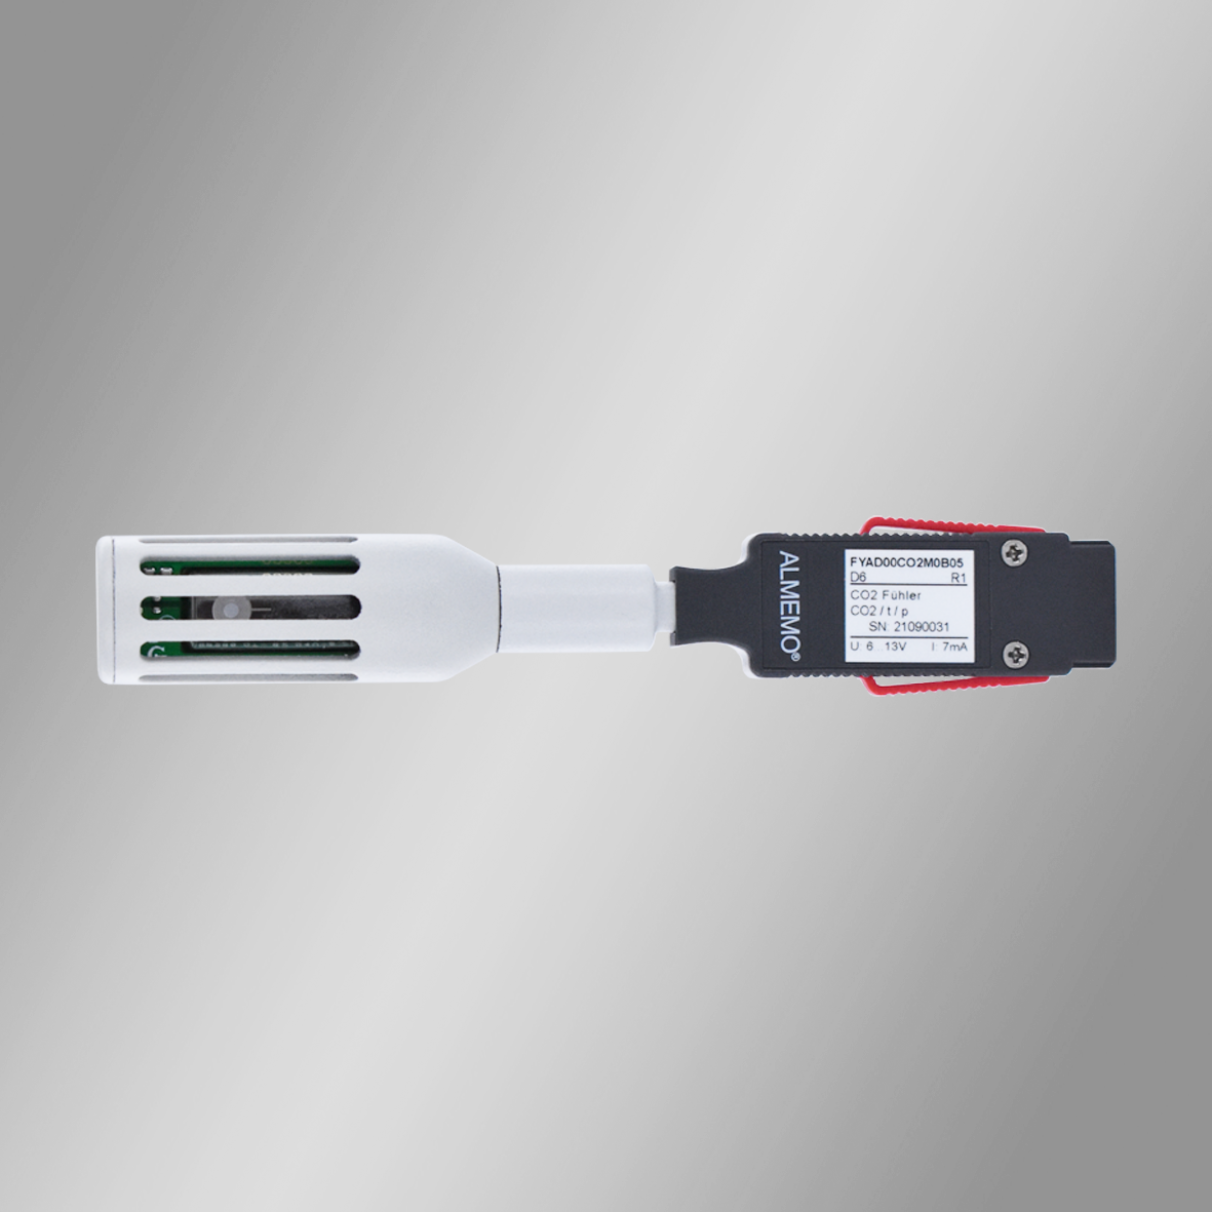 Digitaler CO2-Sensor FYAD 00-CO2Mx